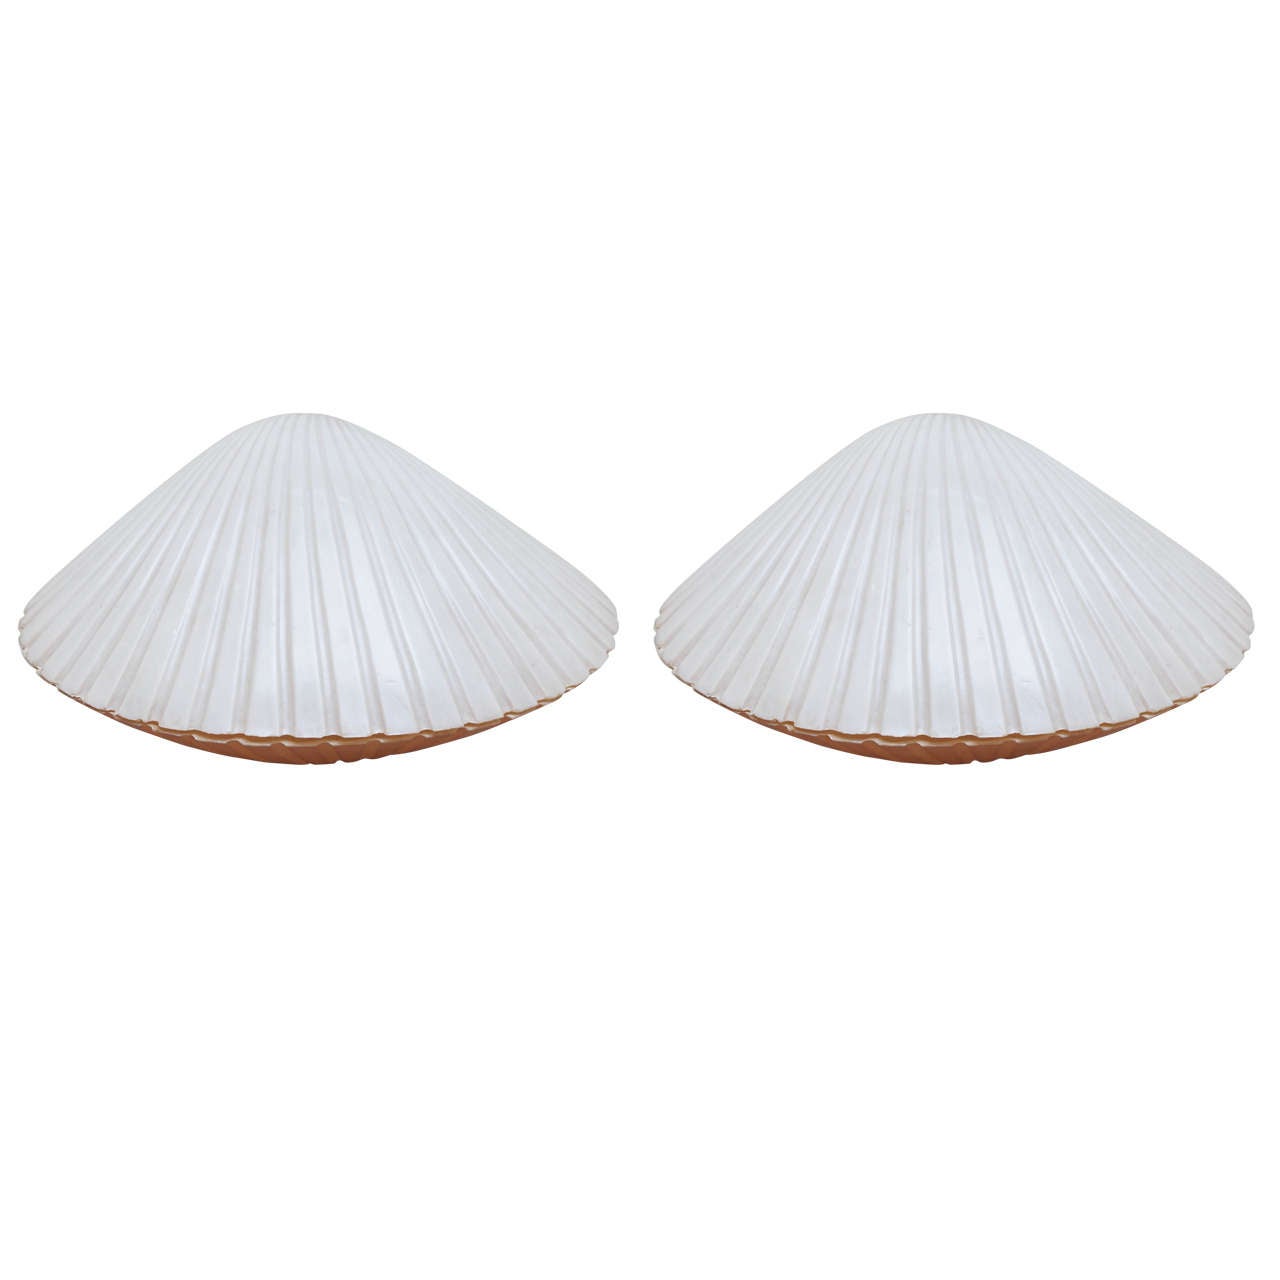 Pair of 1960s Fibre de Verre Shell Shaped Lamps